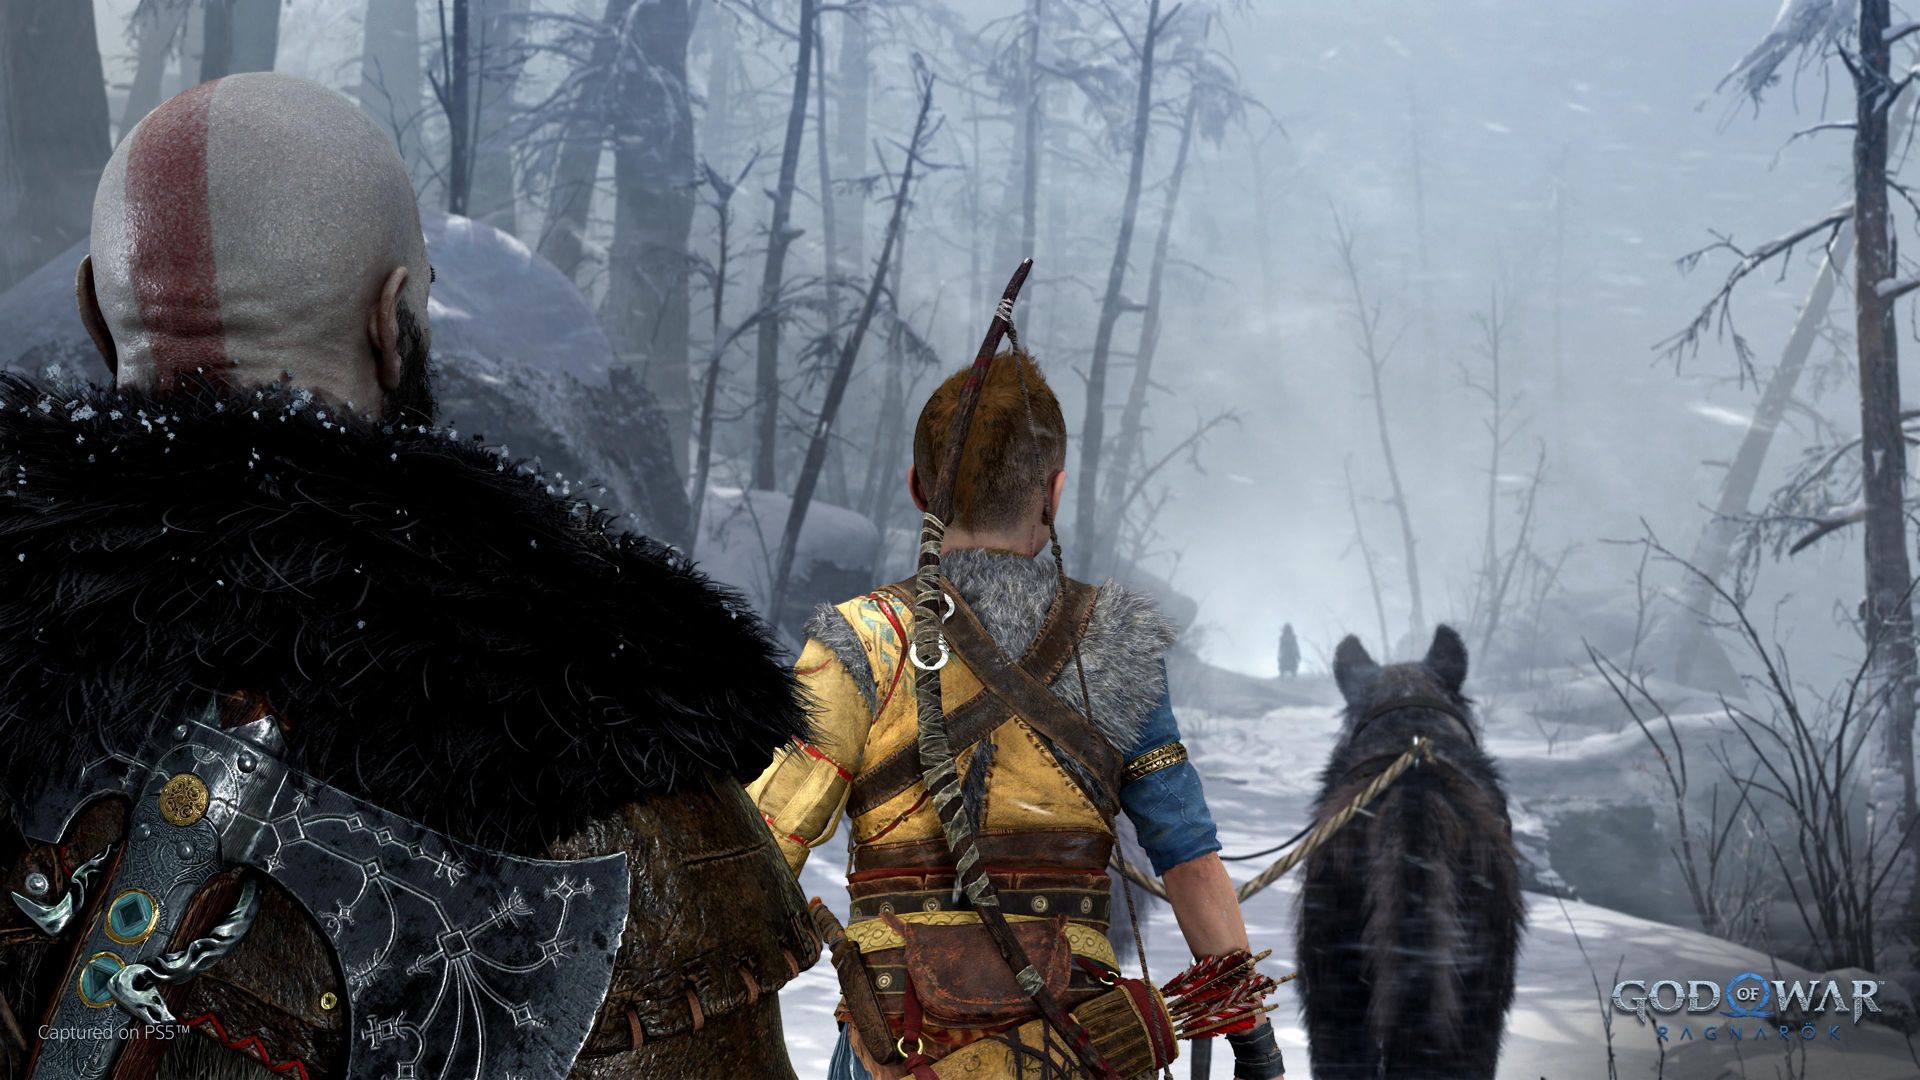 God of War Ragnarok et Elden Ring pris dans une guerre débile entre fanboys PlayStation et Xbox